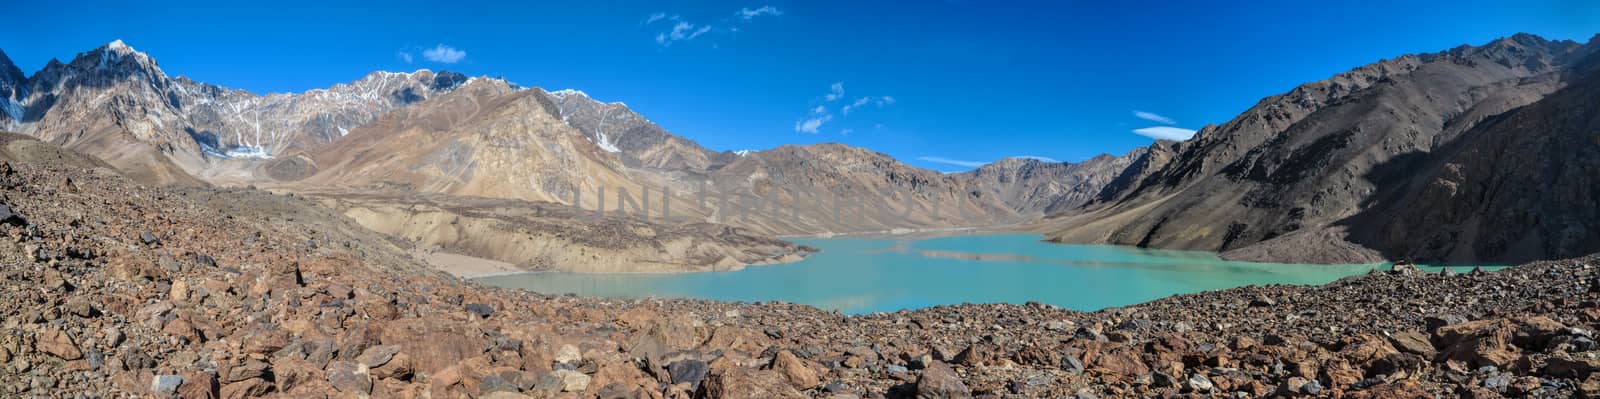 Scenic panorama of turquoise lake on arid landscape in Tajikistan on sunny day